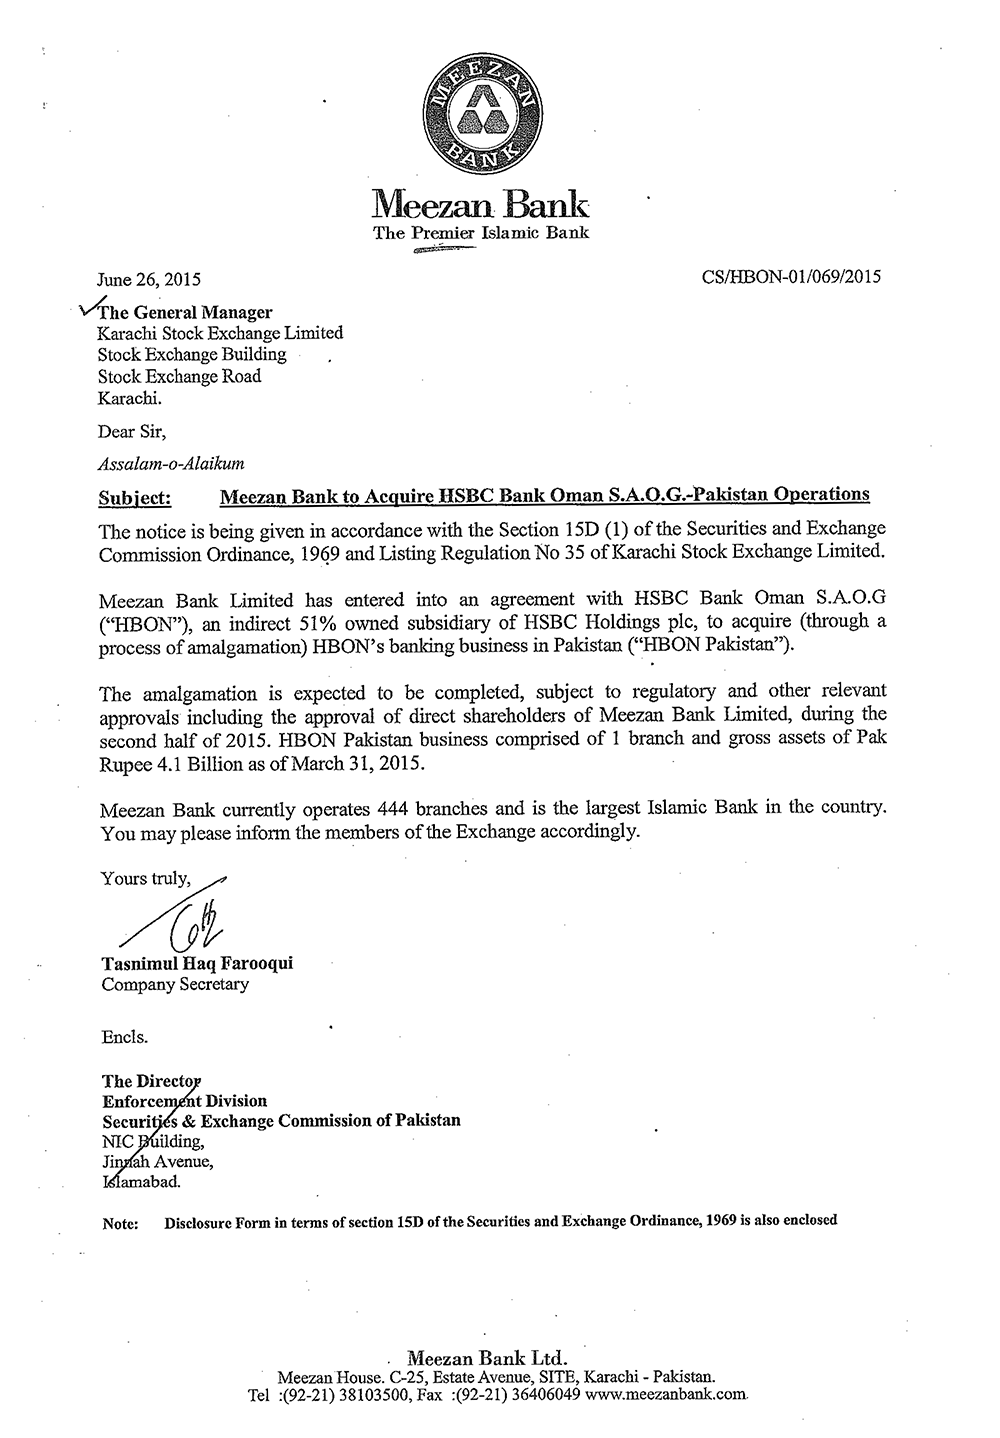 Meezan Bank to Acquire HSBC Bank Oman S.A.O.G.-Pakistan Operations 2015 (1)